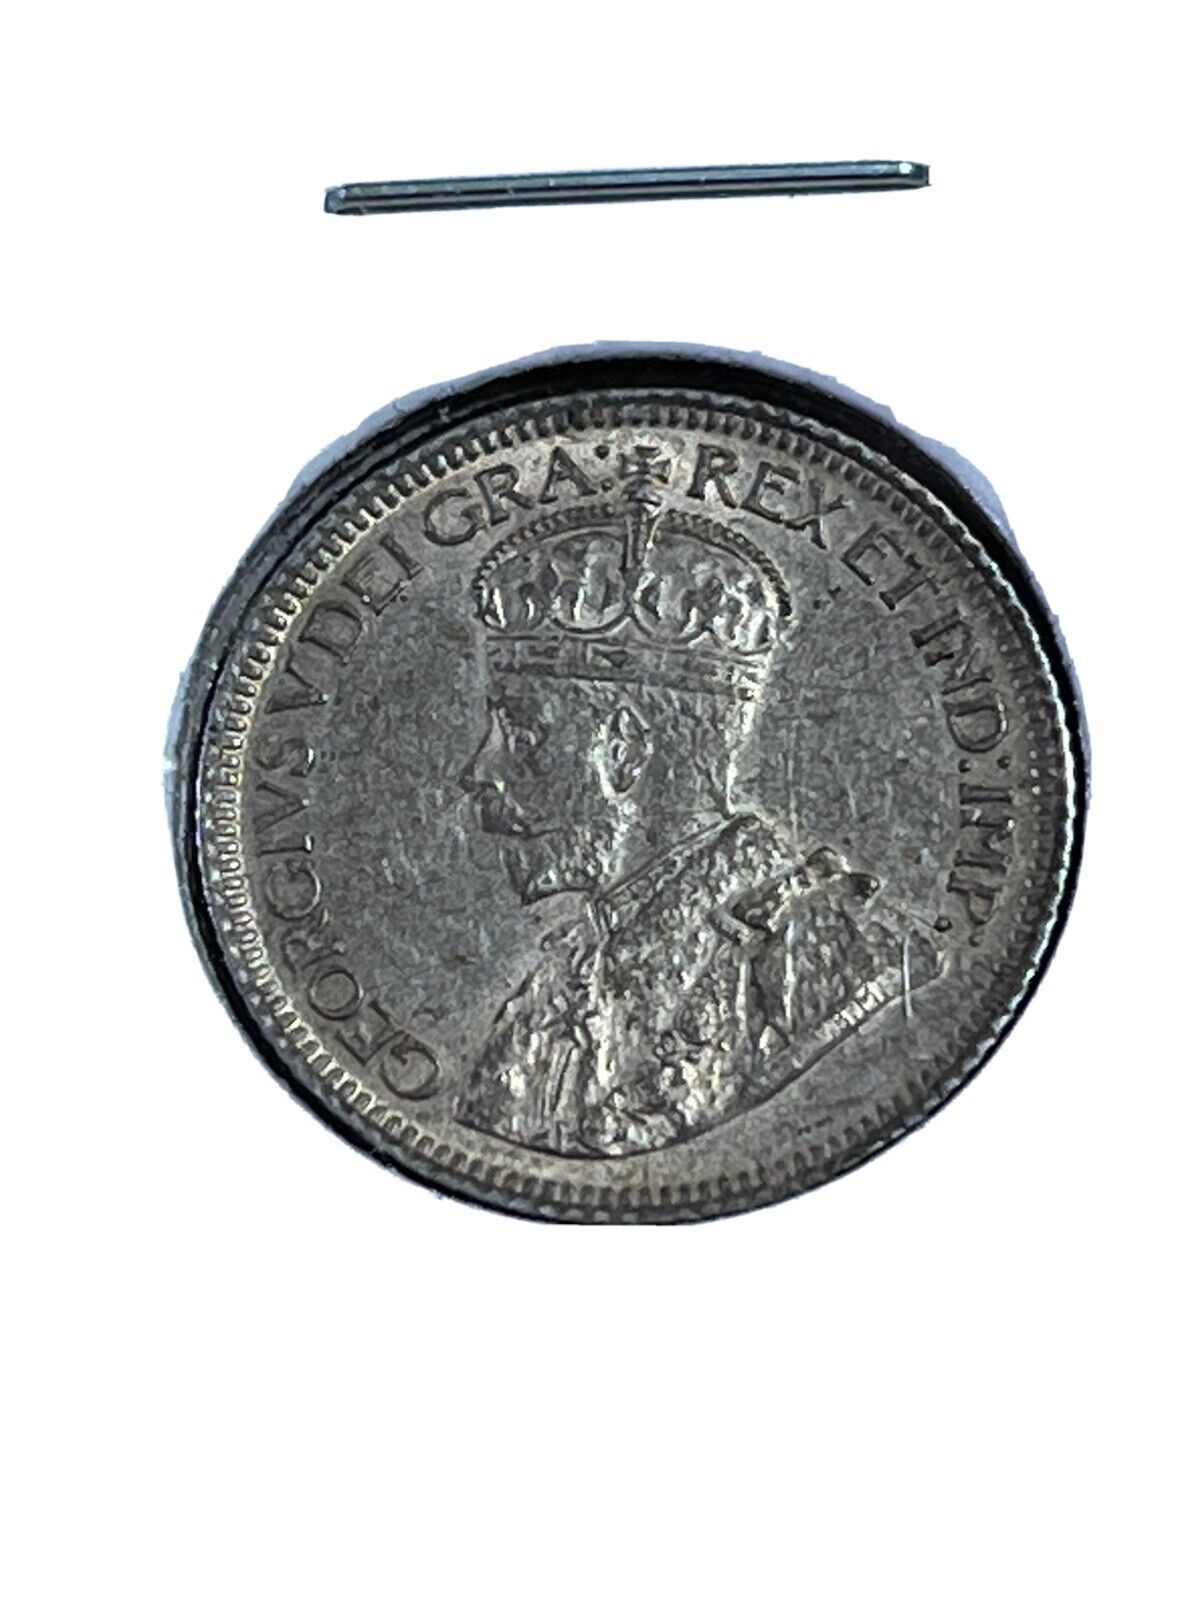 1930 Canada 10 Cents Silver Coin